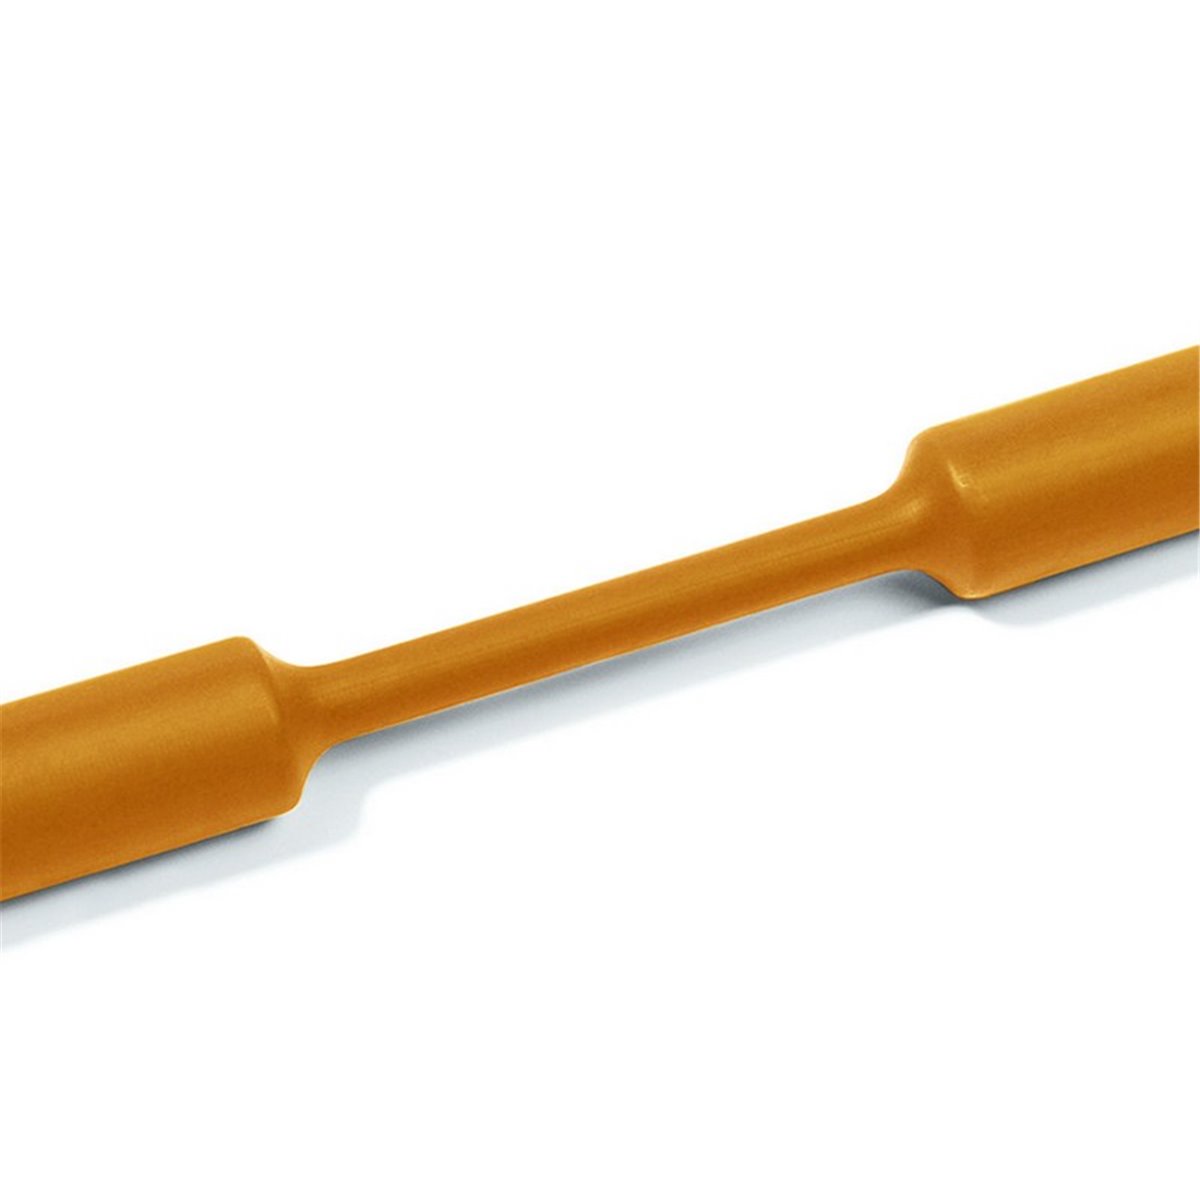 Heat shrinkable tubing 2:1 TF21-19.1/9.5-PO-X-OG HellermannTyton, orange, 25m